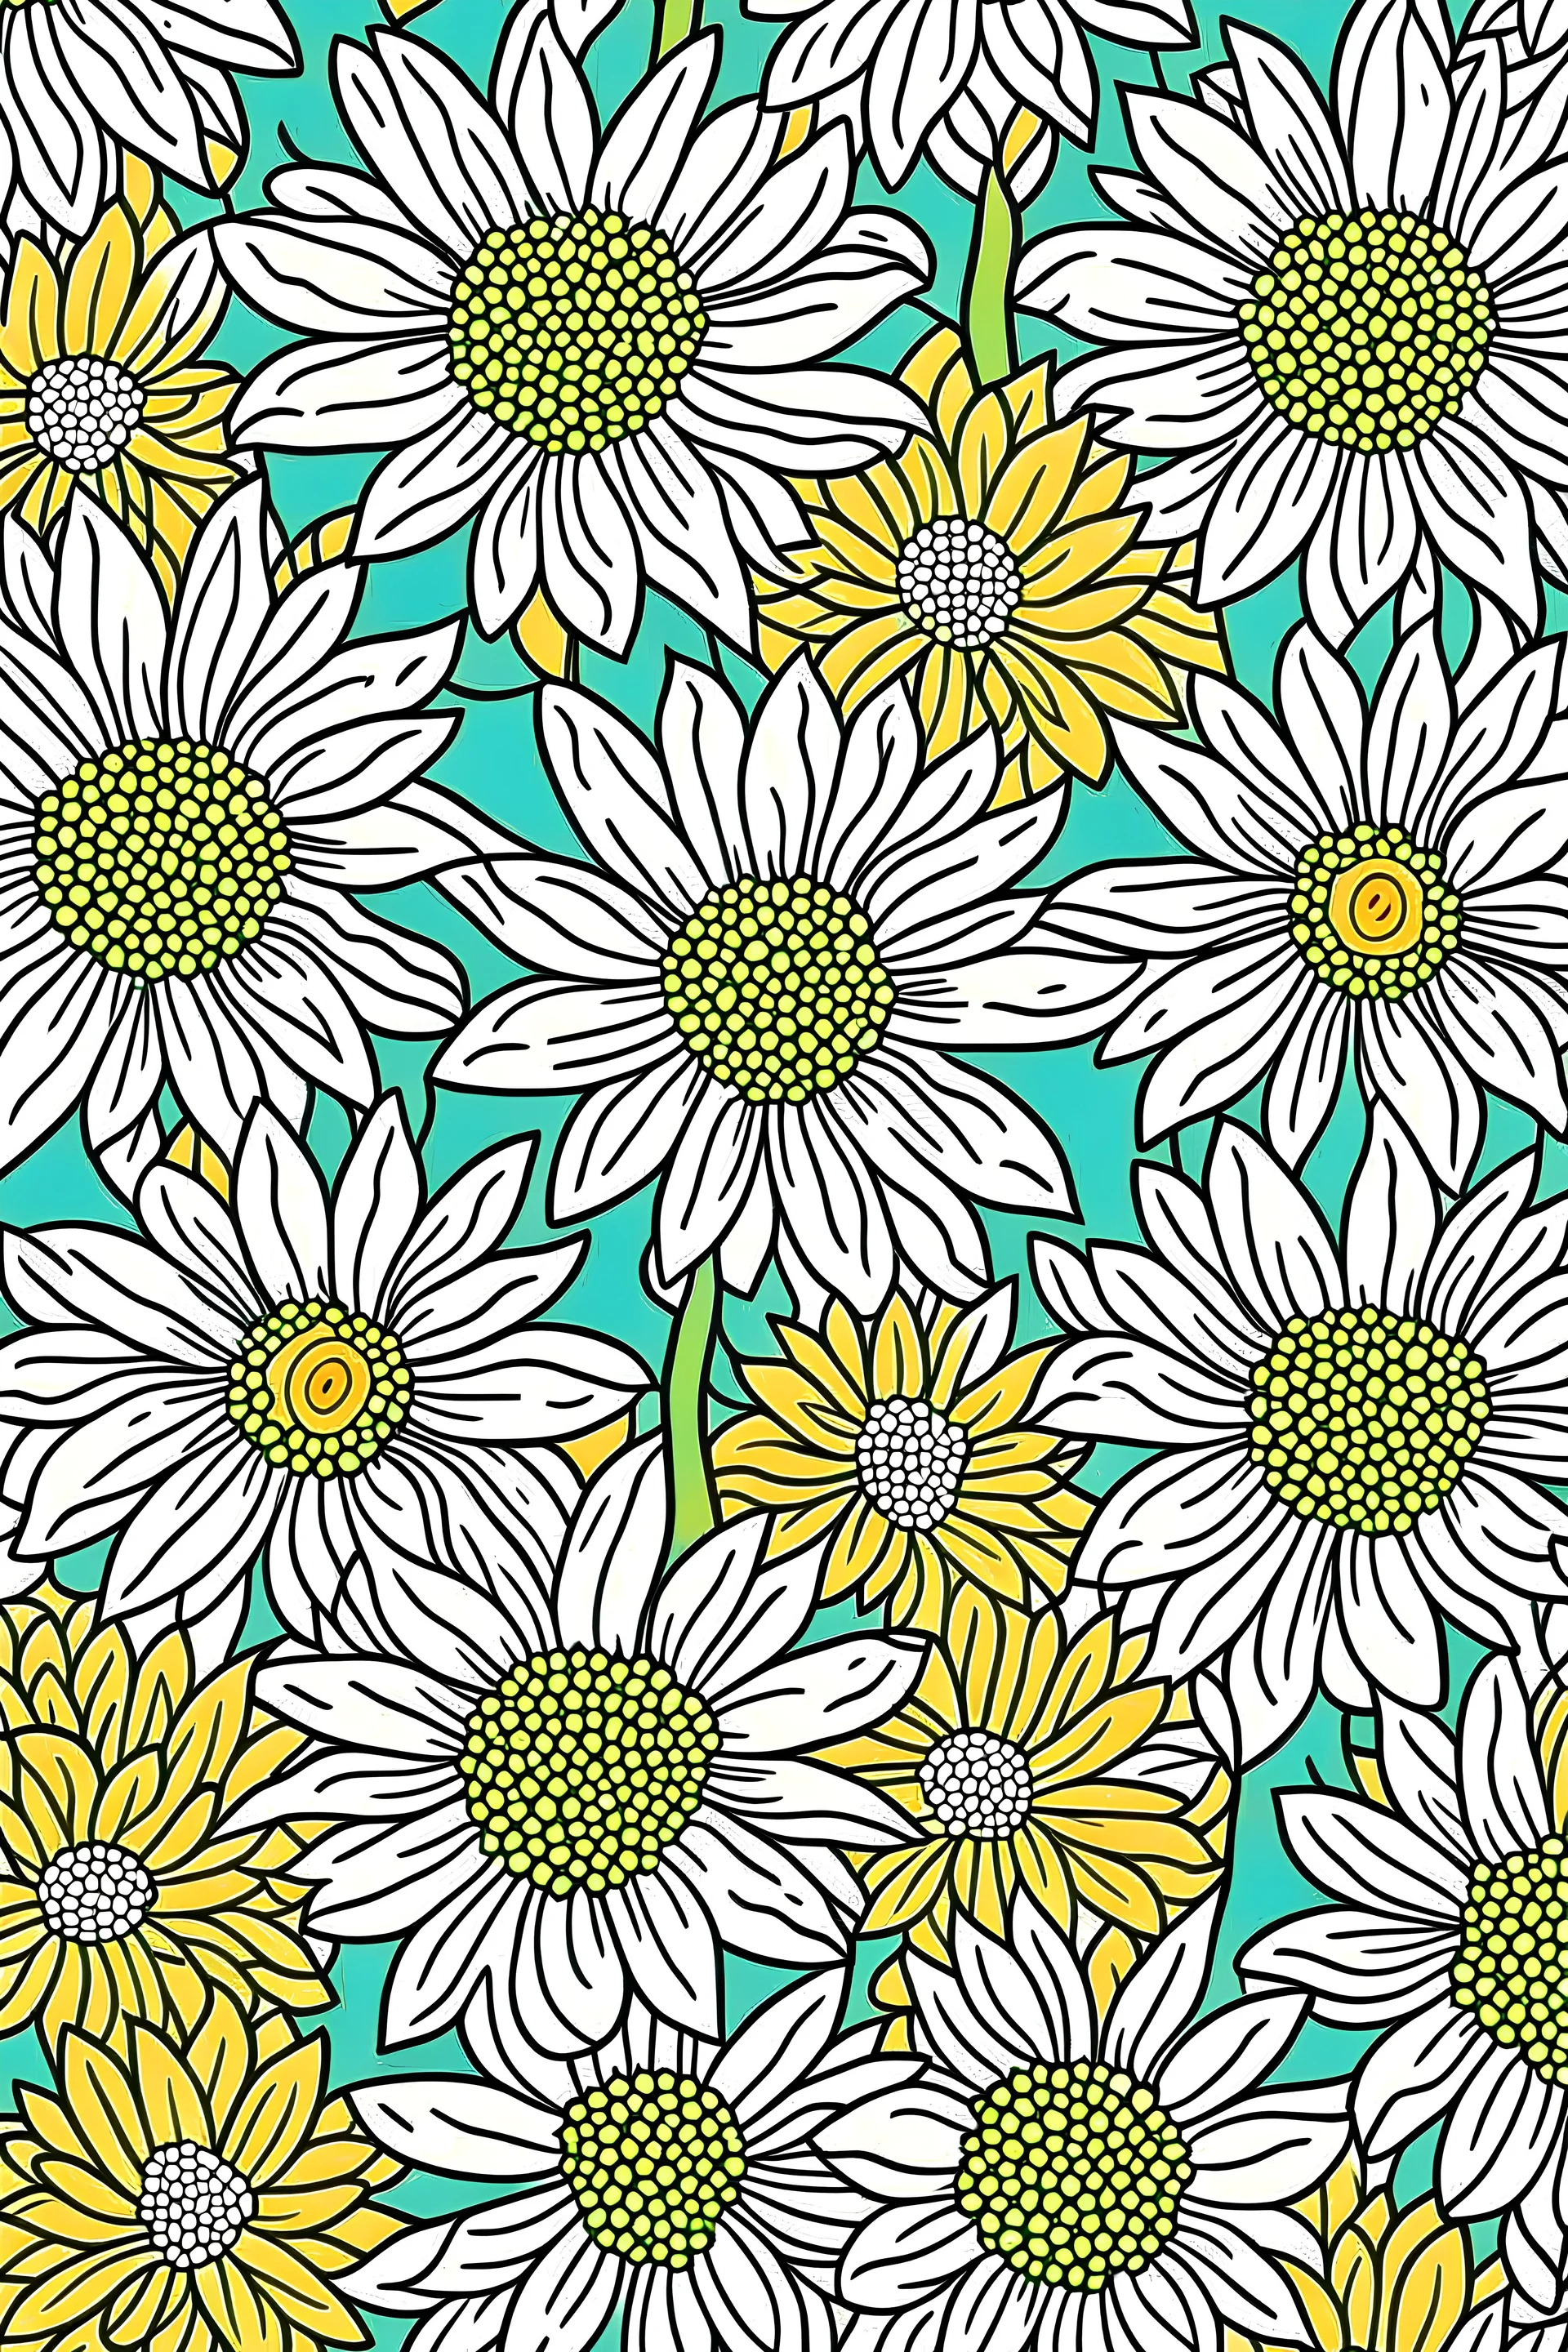 pattern of daisy's